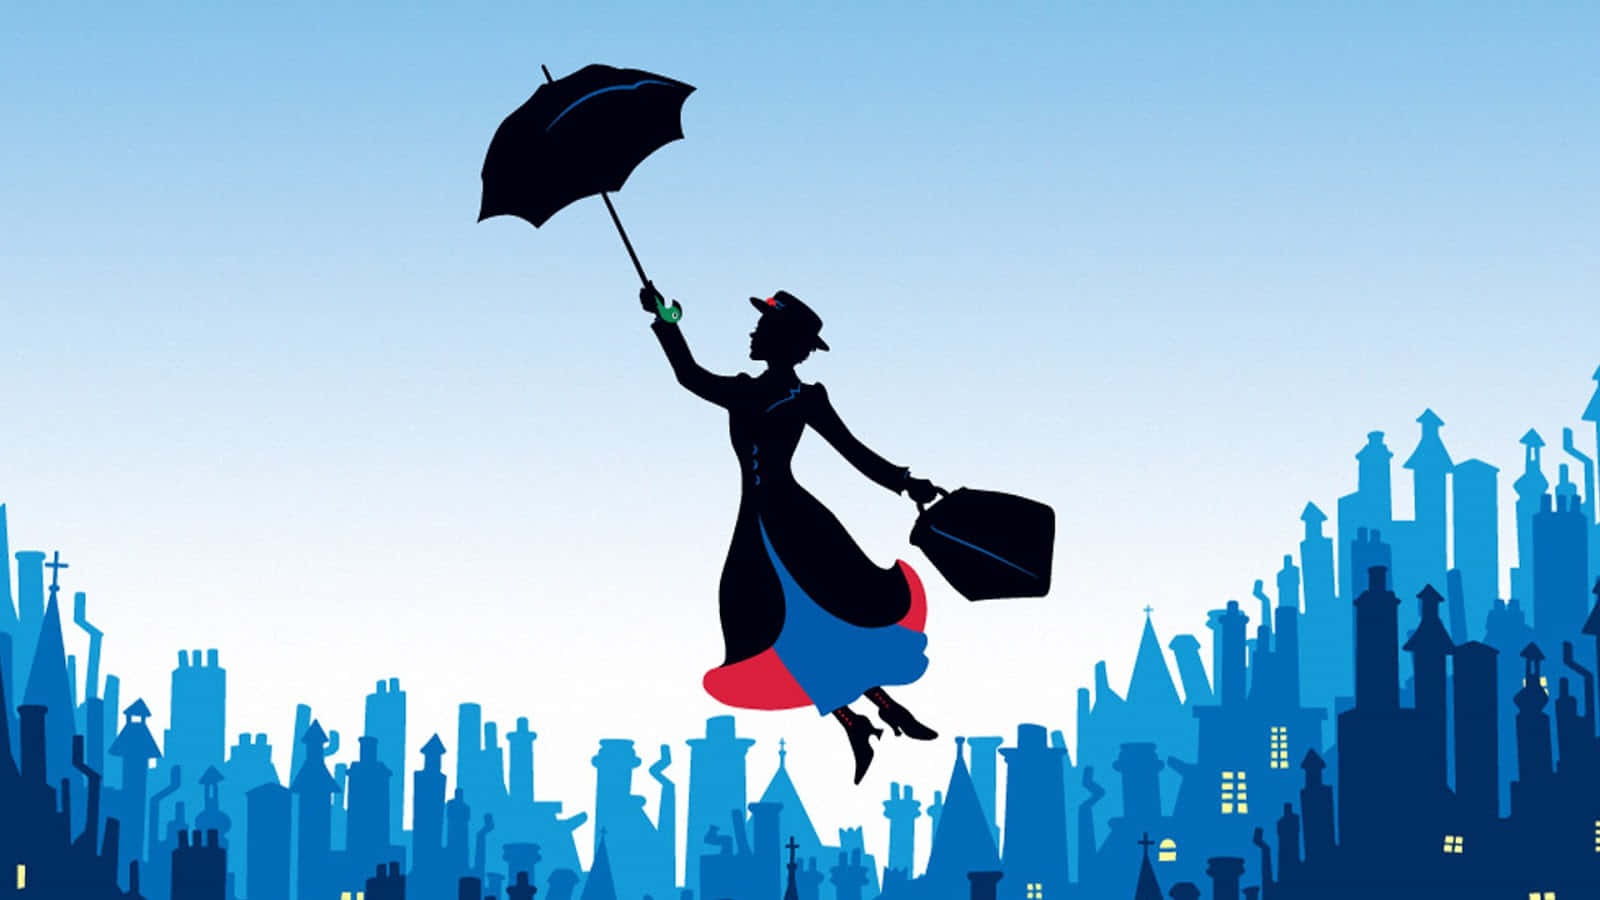 Download Captivating Mary Poppins Wallpaper Wallpaper | Wallpapers.com